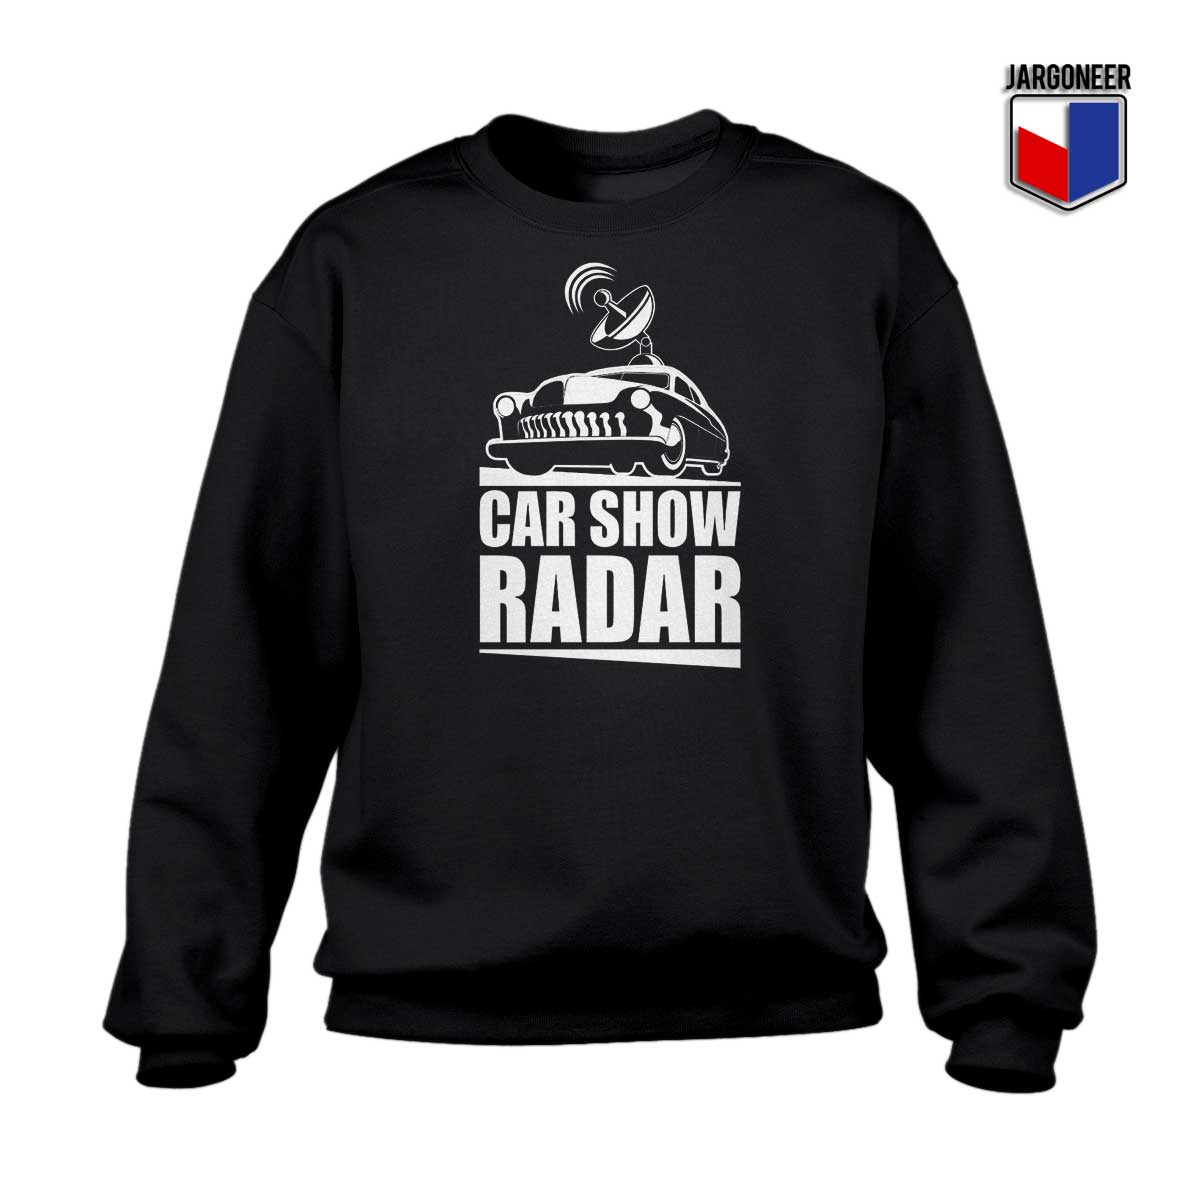 Car Show Radar Sweatshirt - Shop Unique Graphic Cool Shirt Designs